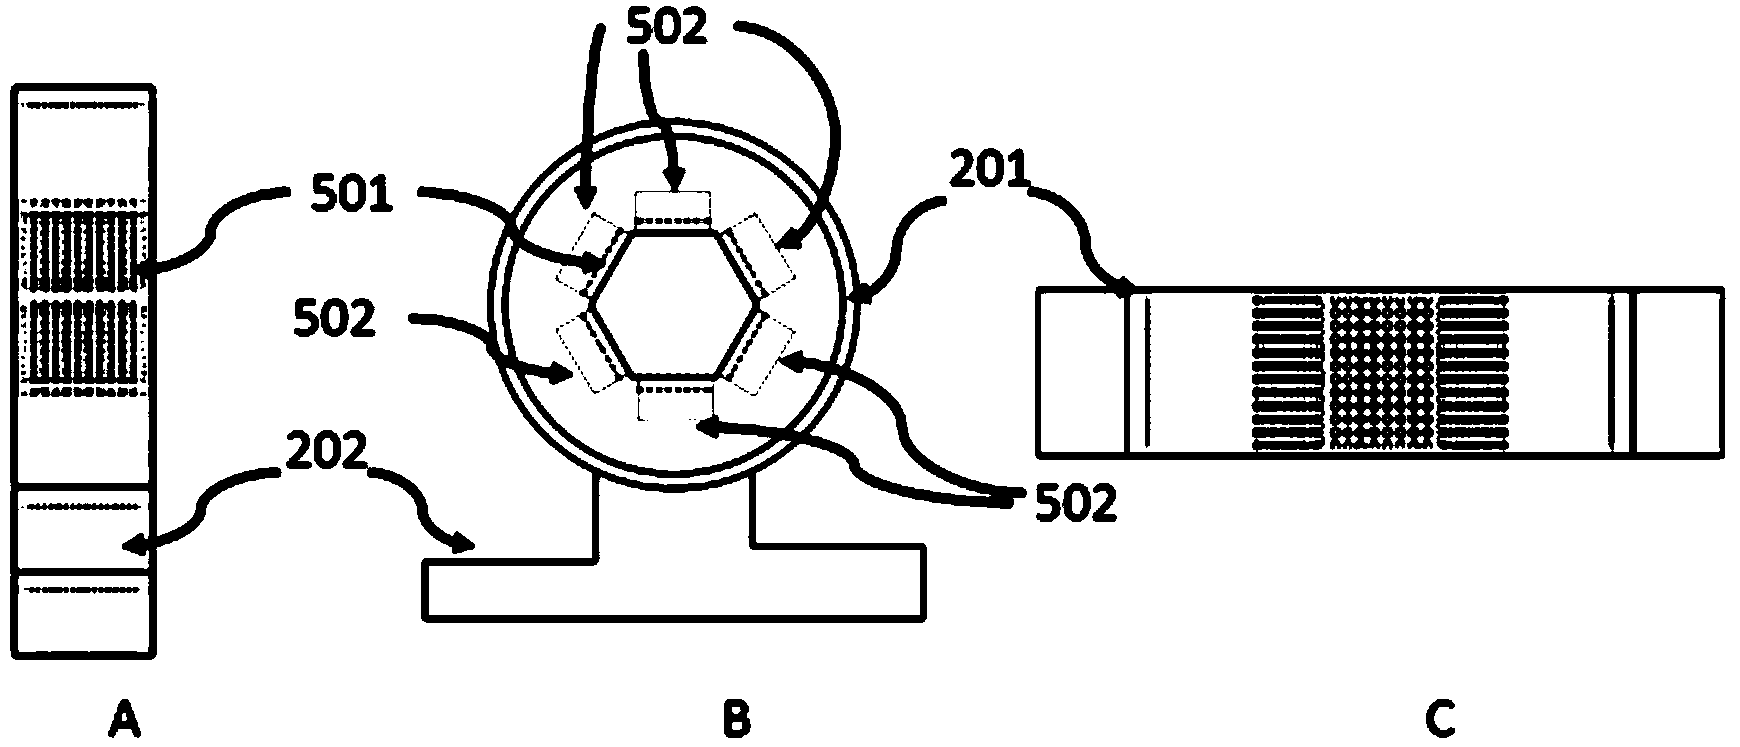 SPECT (single-photon emission computed tomography) imaging method based on ordered subset algorithm